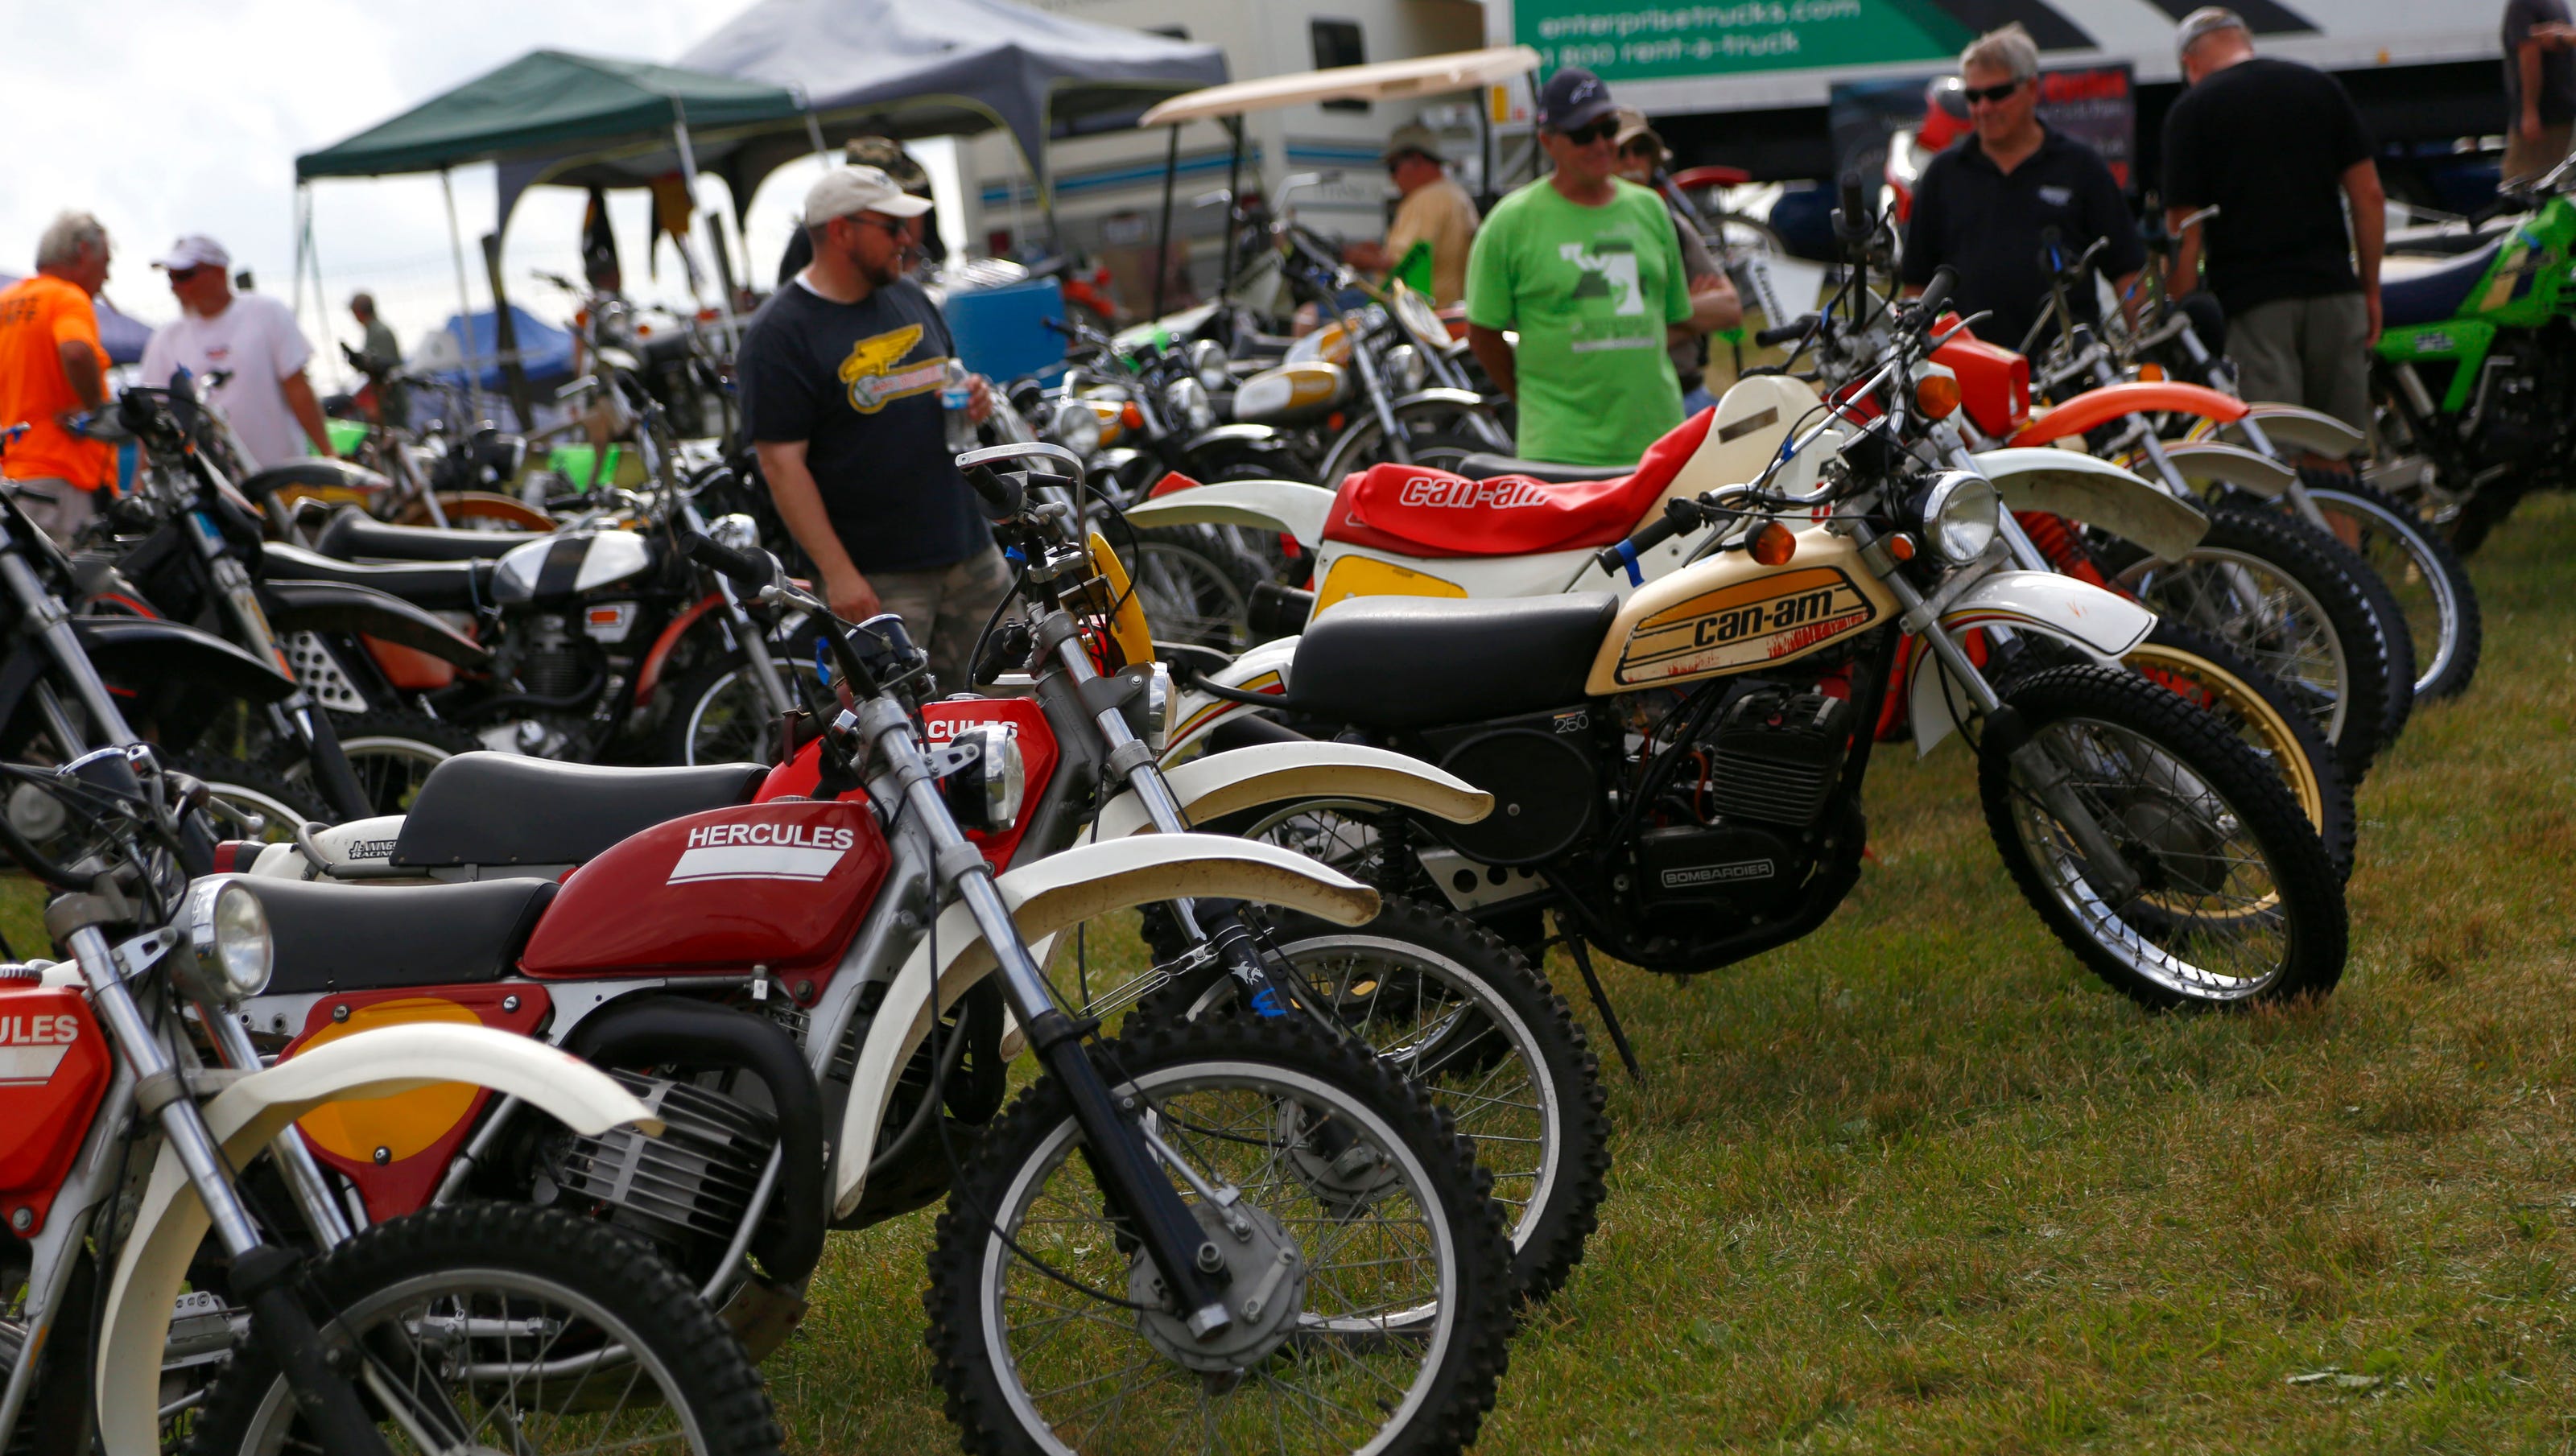 AMA Vintage Motorcycle Days revs up July at MidOhio